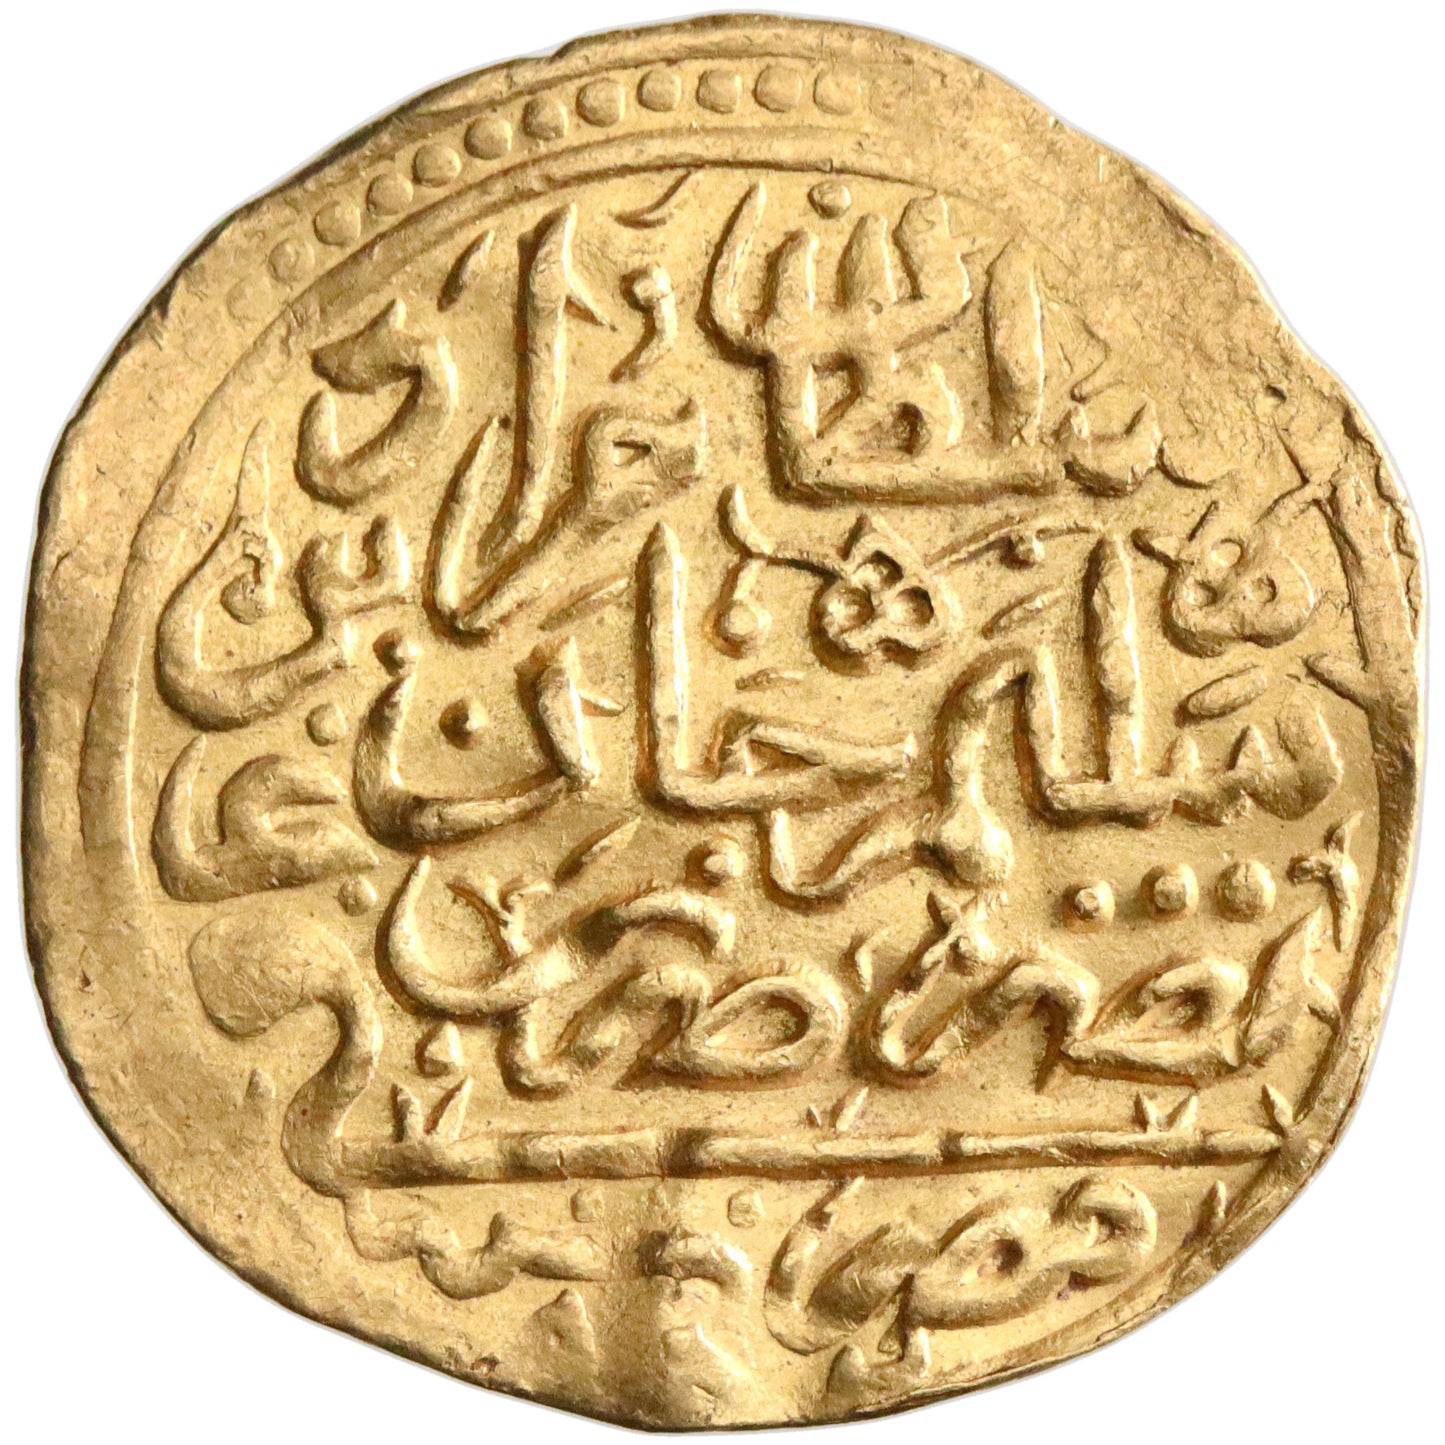 Ottoman, Murad III, gold sultani, Misr (Egypt) mint, AH 982